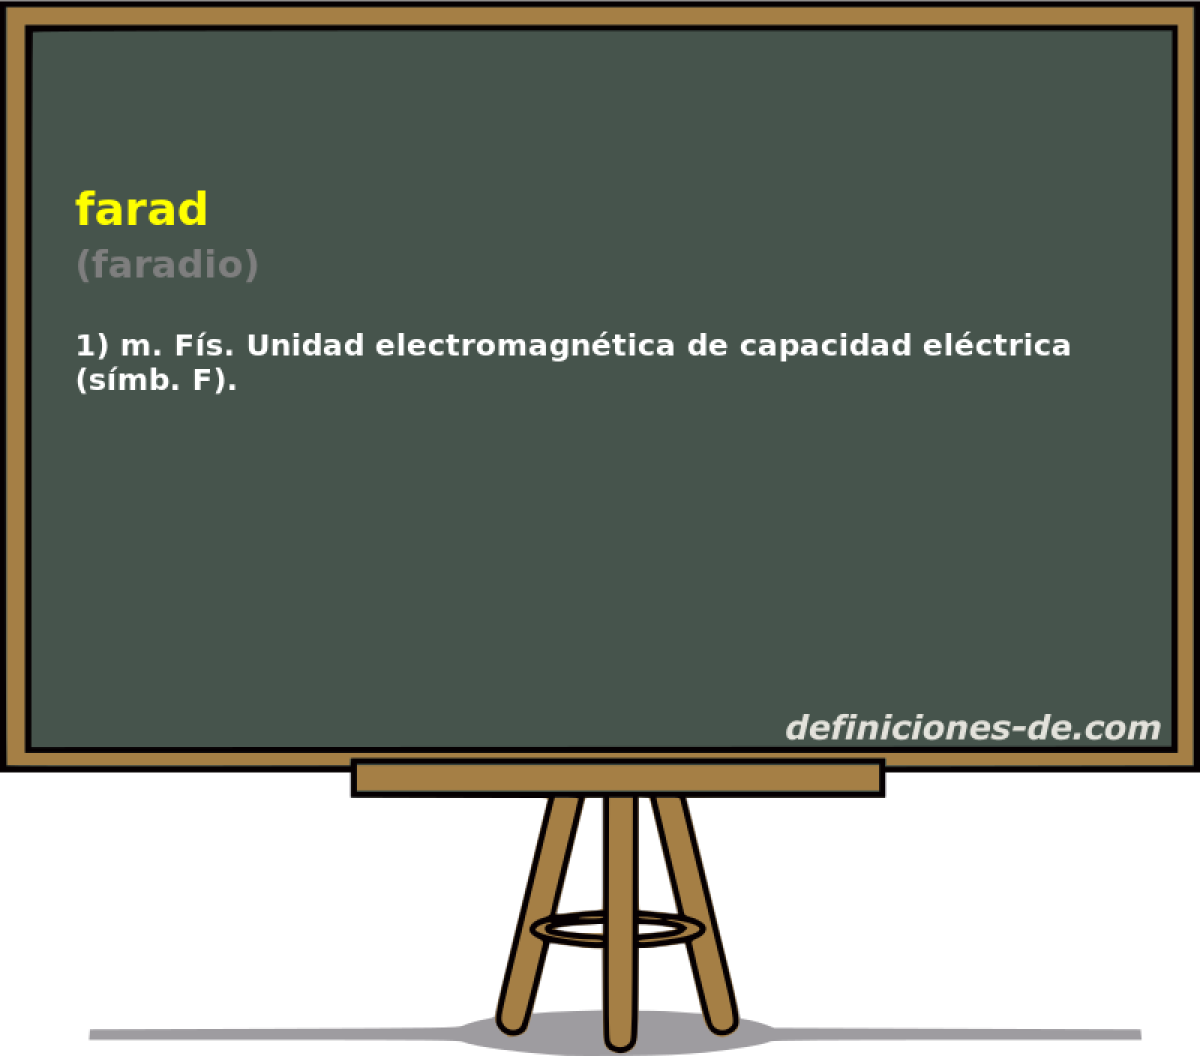 farad (faradio)